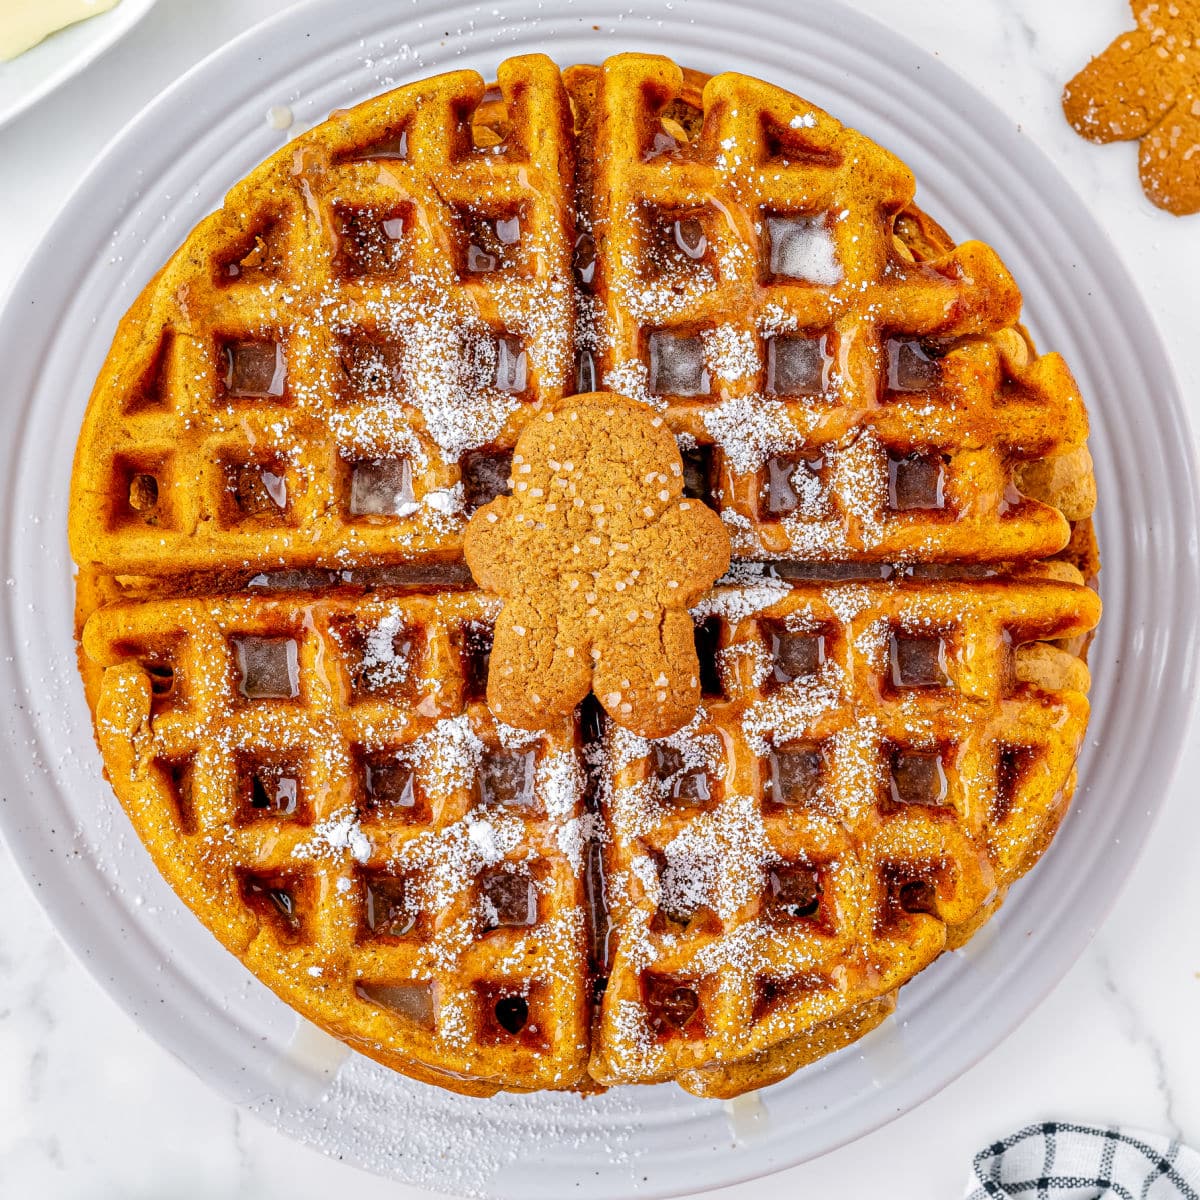 https://foodfolksandfun.net/wp-content/uploads/2017/11/Gingerbread-Waffle-Recipe.jpg